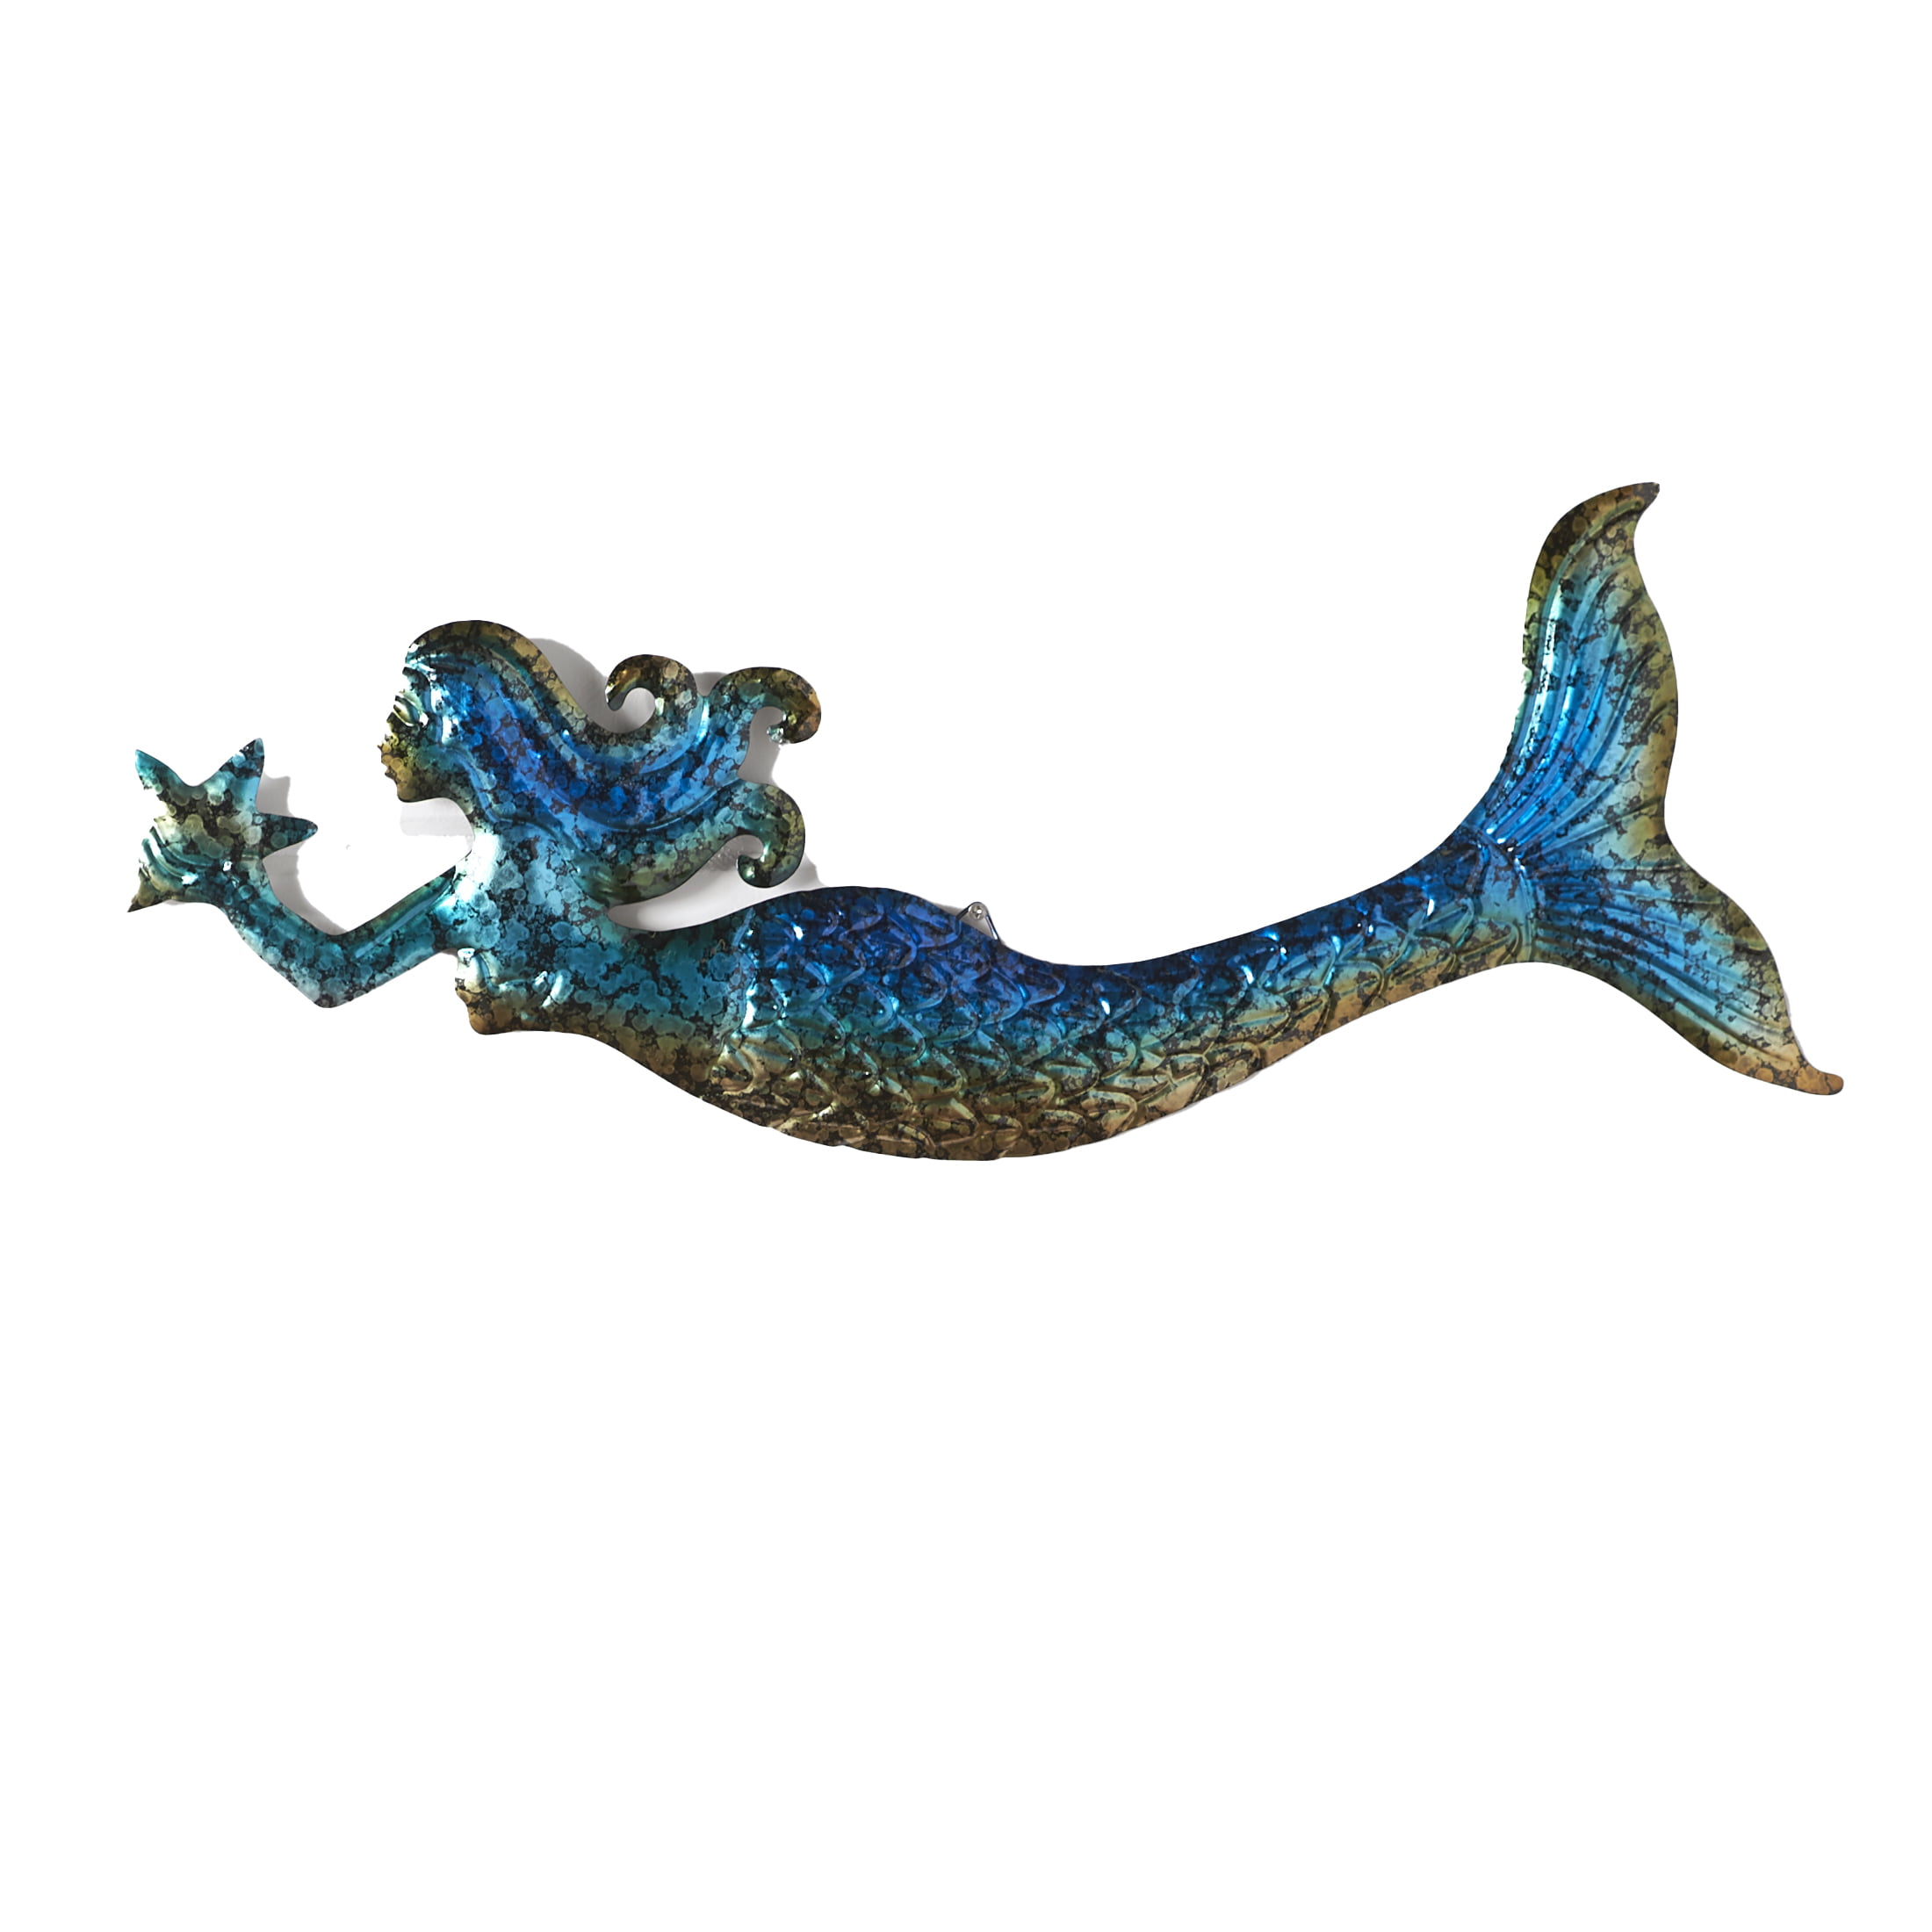 Decorative Mermaid Metal Wall Sculpture Art Hanging Home Decor Sea Life Ocean 